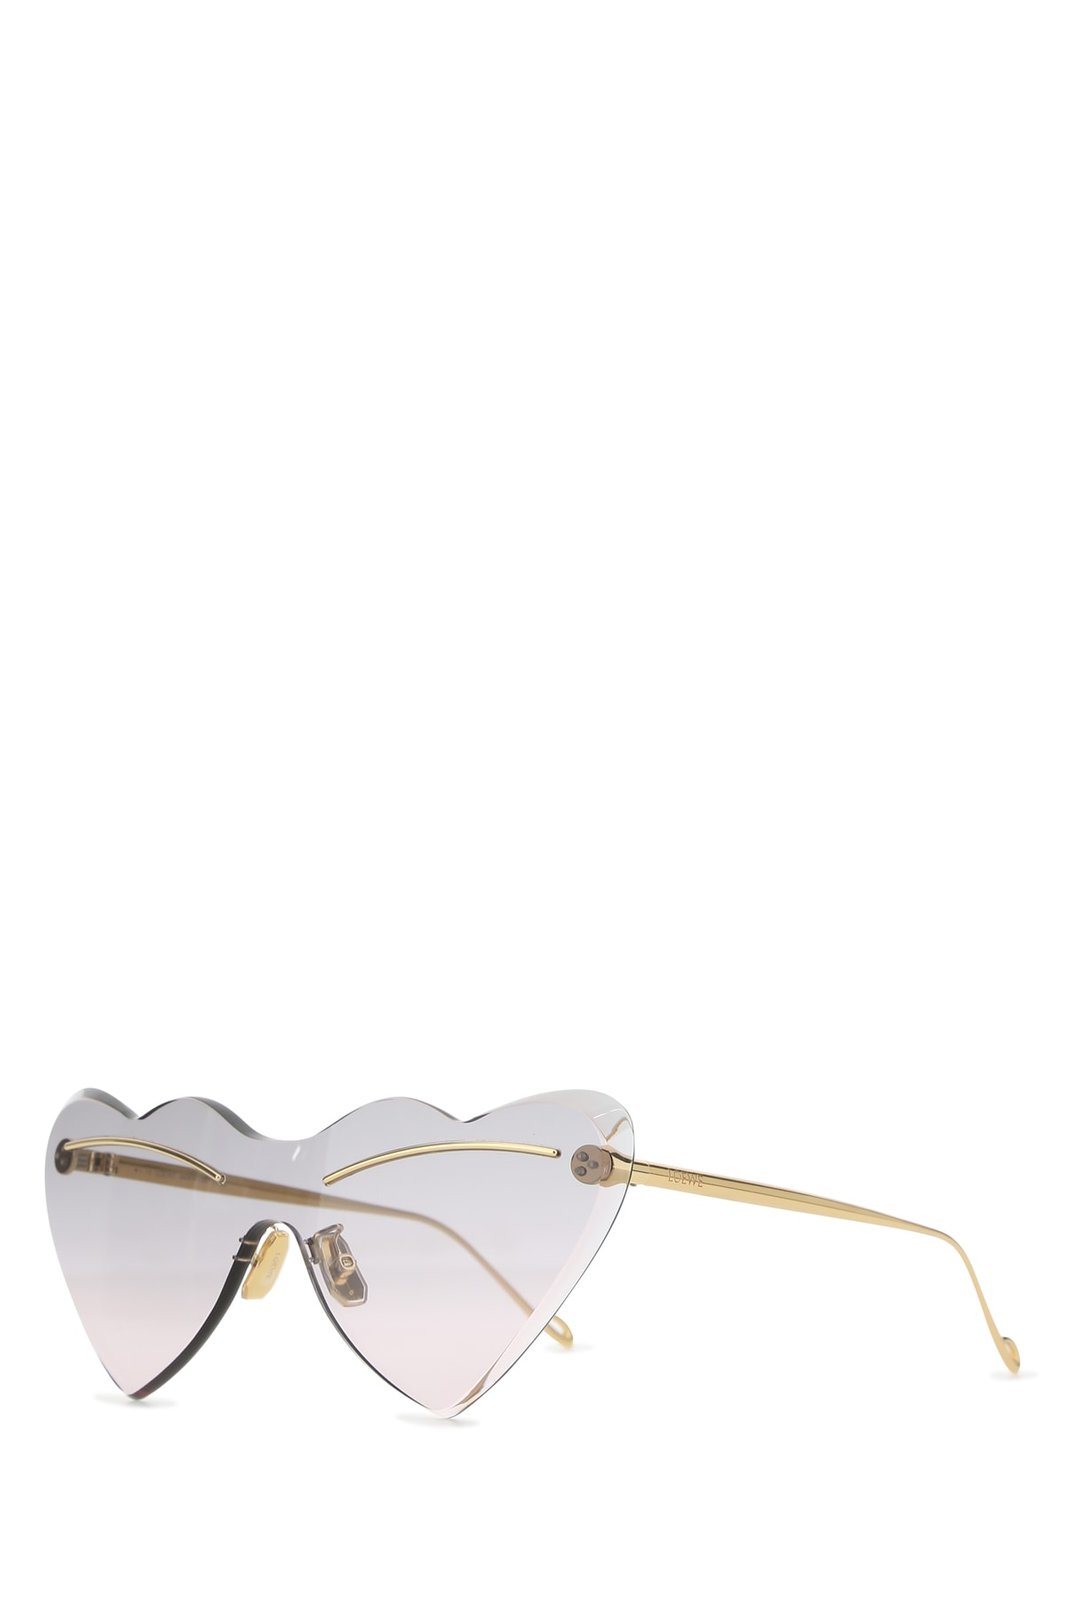 Loewe Heart-Shape Frame Sunglasses